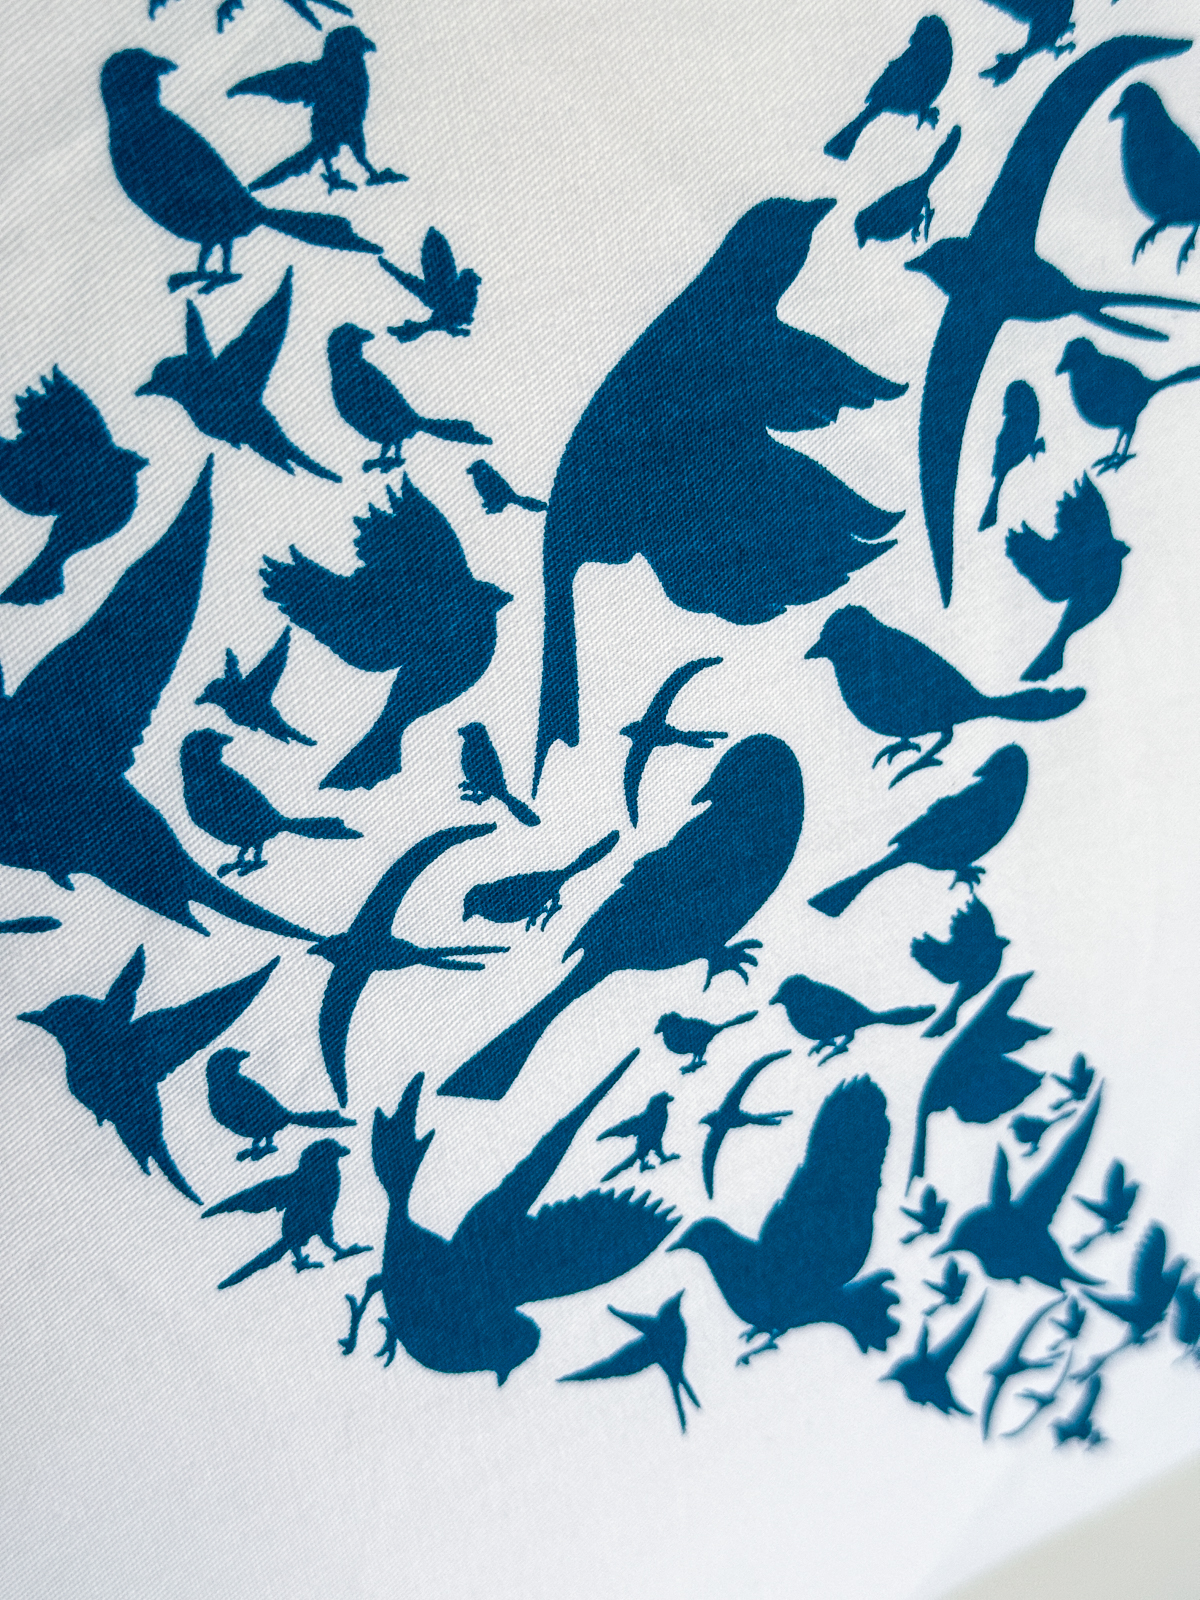 close up view of screen printed bird design